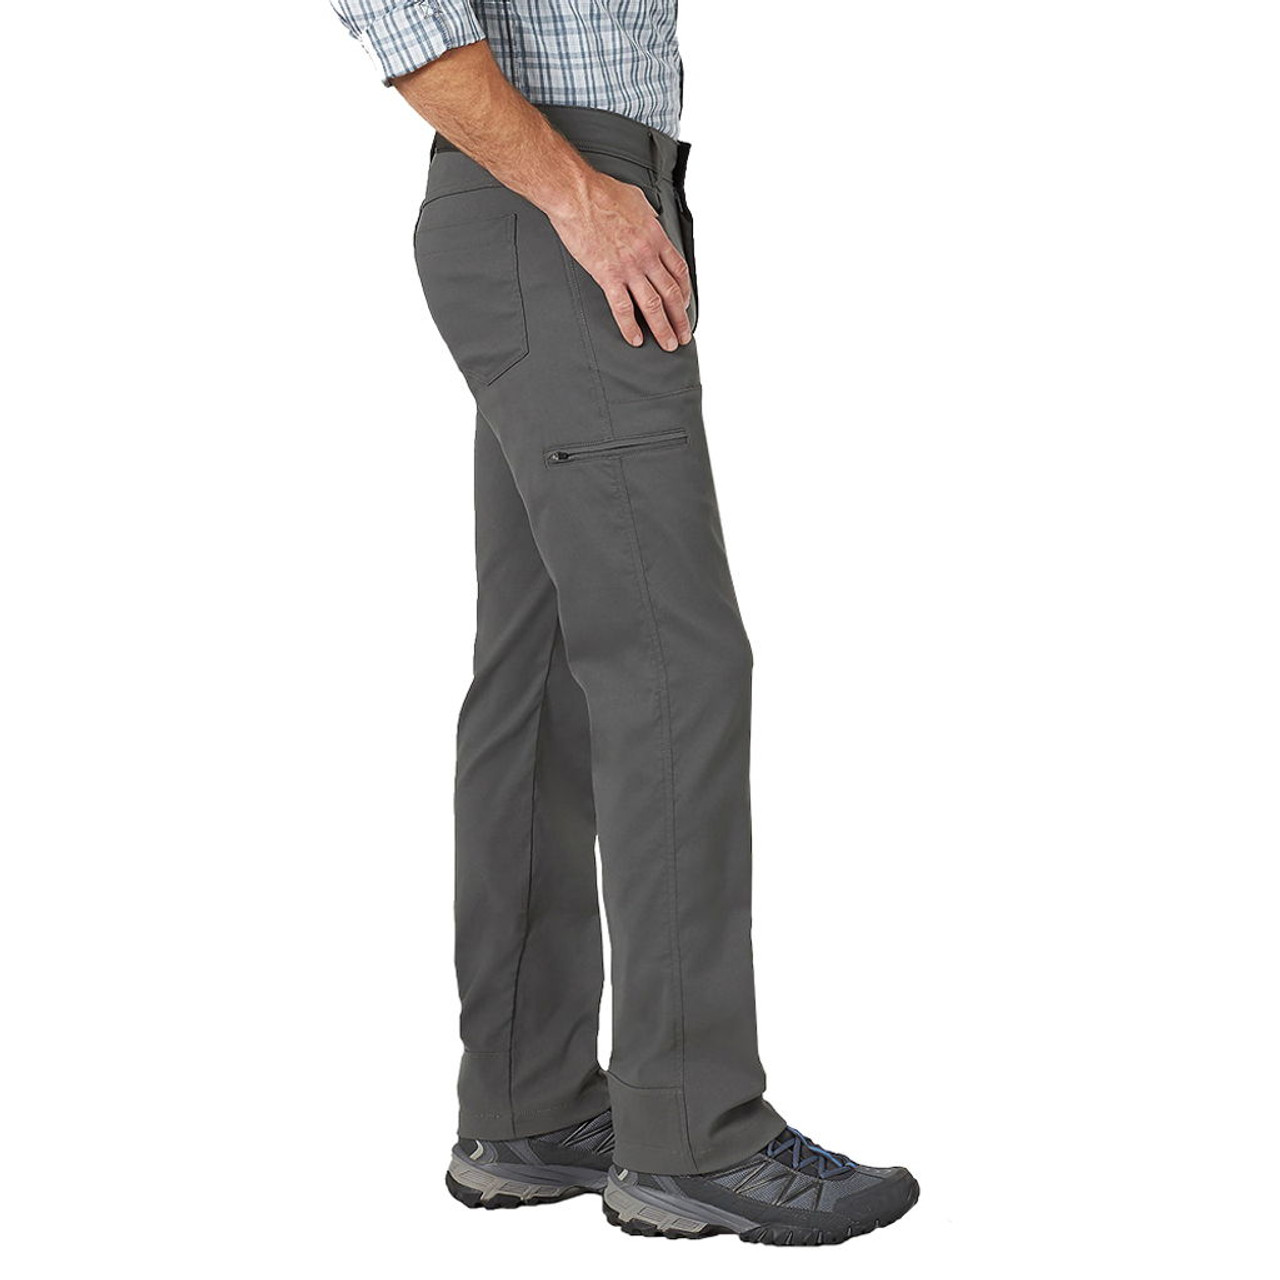 Men's Wrangler ATG Synthetic Utility Pants